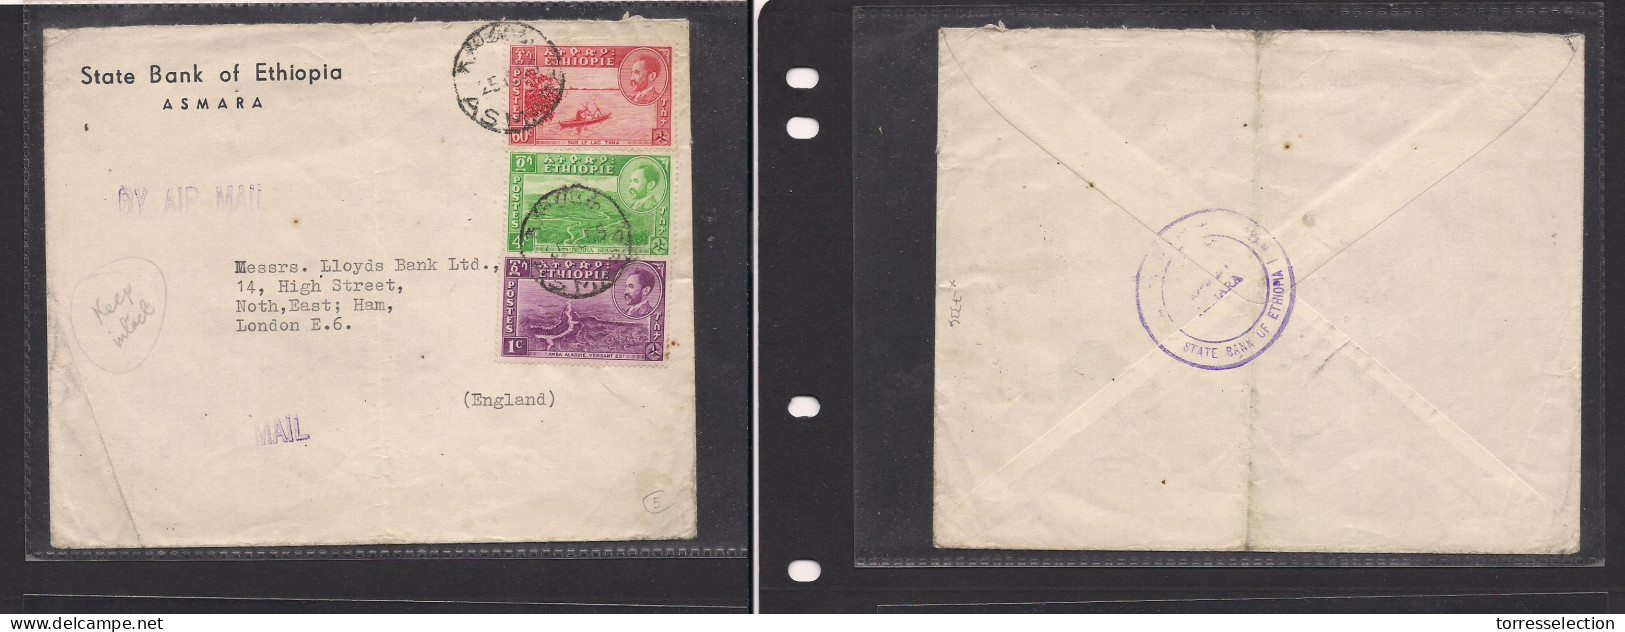 ETHIOPIA. Ethiopia Cover 1955 Asmara To UK Mult Fkd Comercial Env. Easy Deal. XSALE. - Etiopía